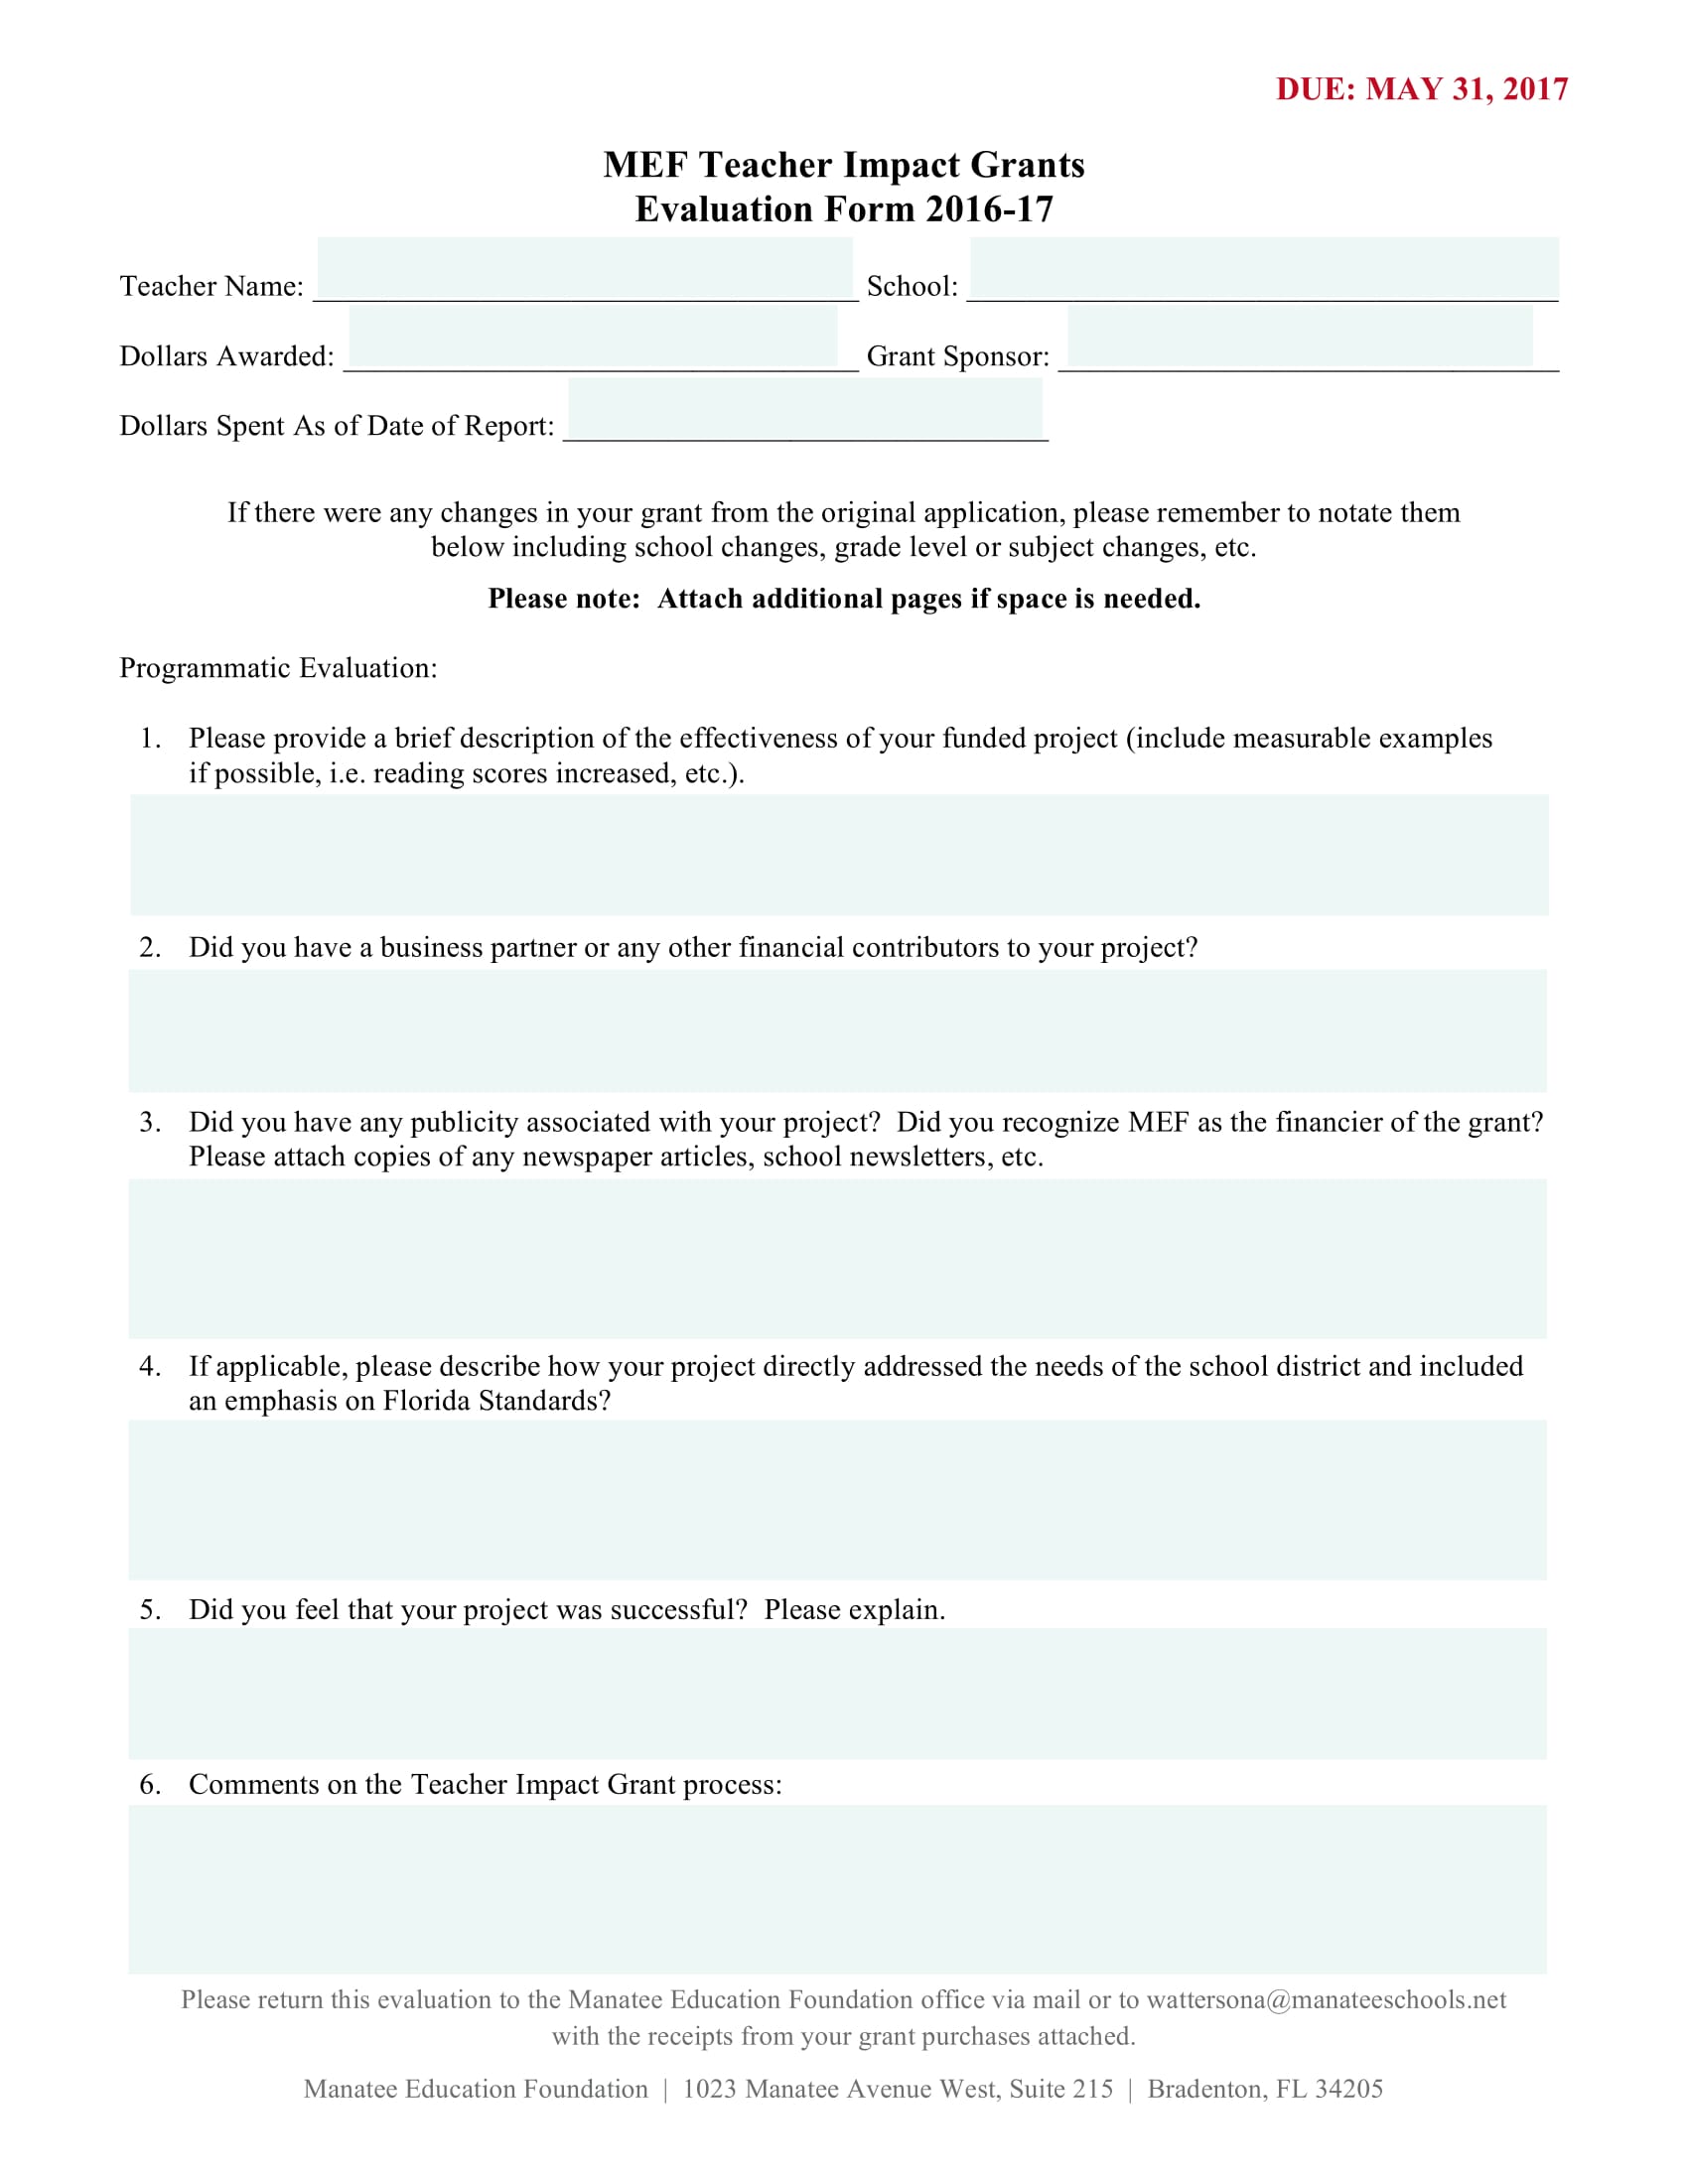 teacher impact grant evaluation form 1